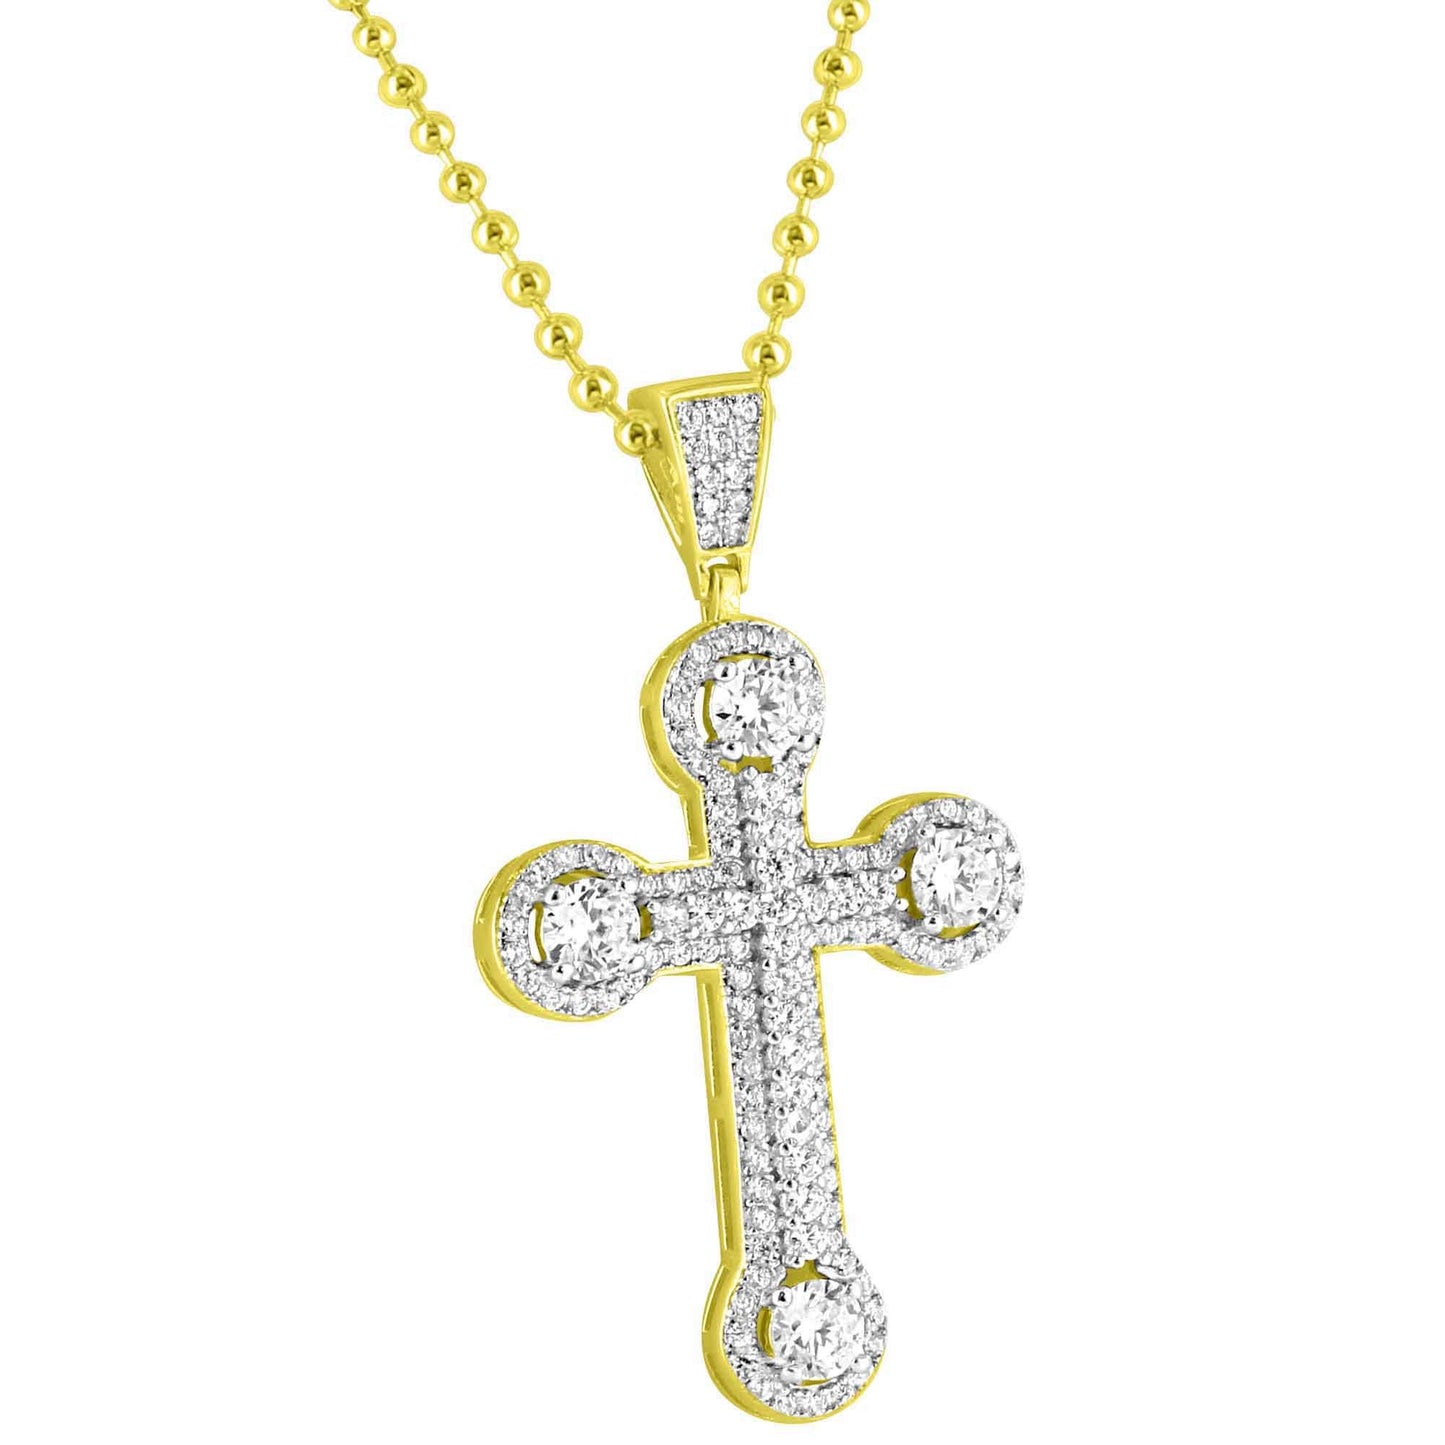 Solitaire Cross Pendant 14k Gold Tone Sterling Silver Lab Diamonds Free Bead Chain